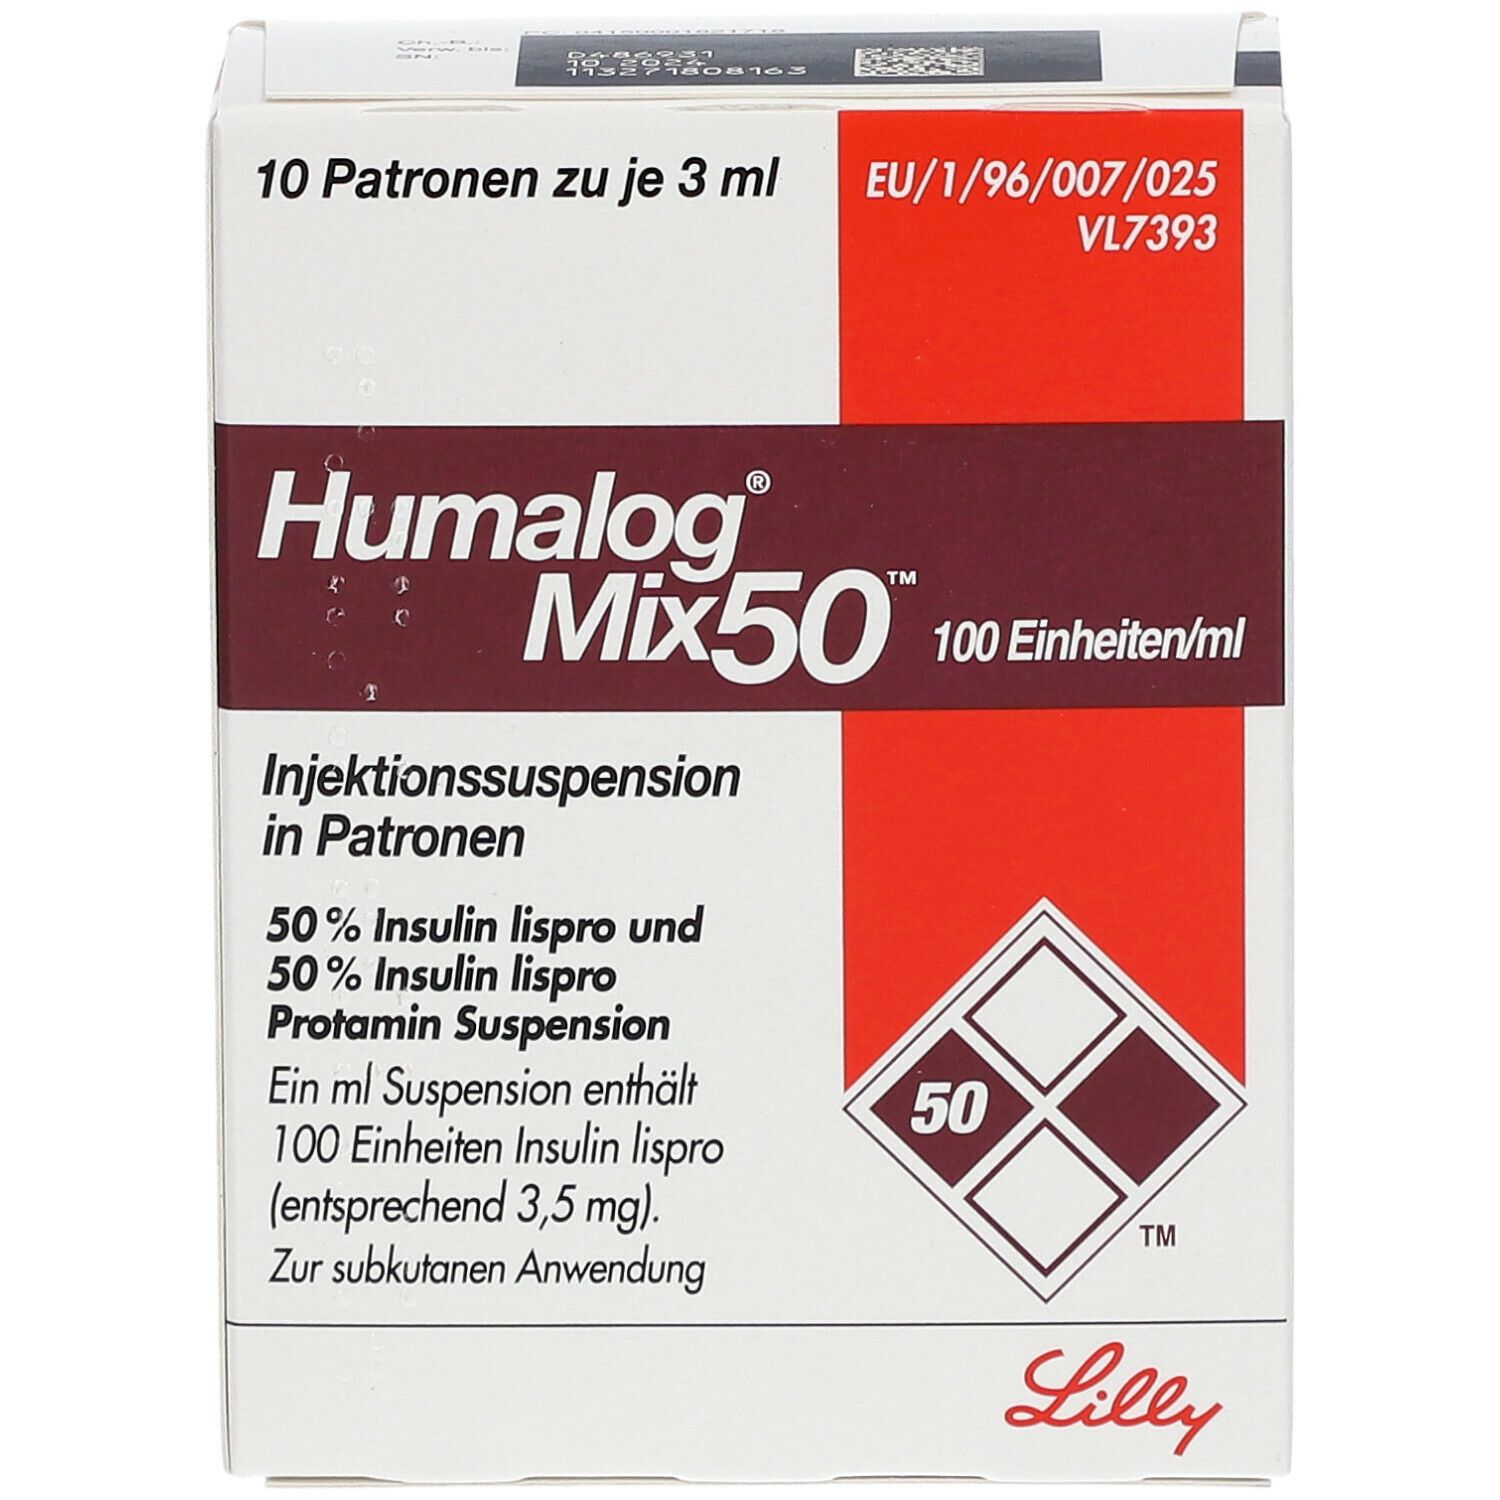 Humalog® Mix50™ 100 Einheiten/ml